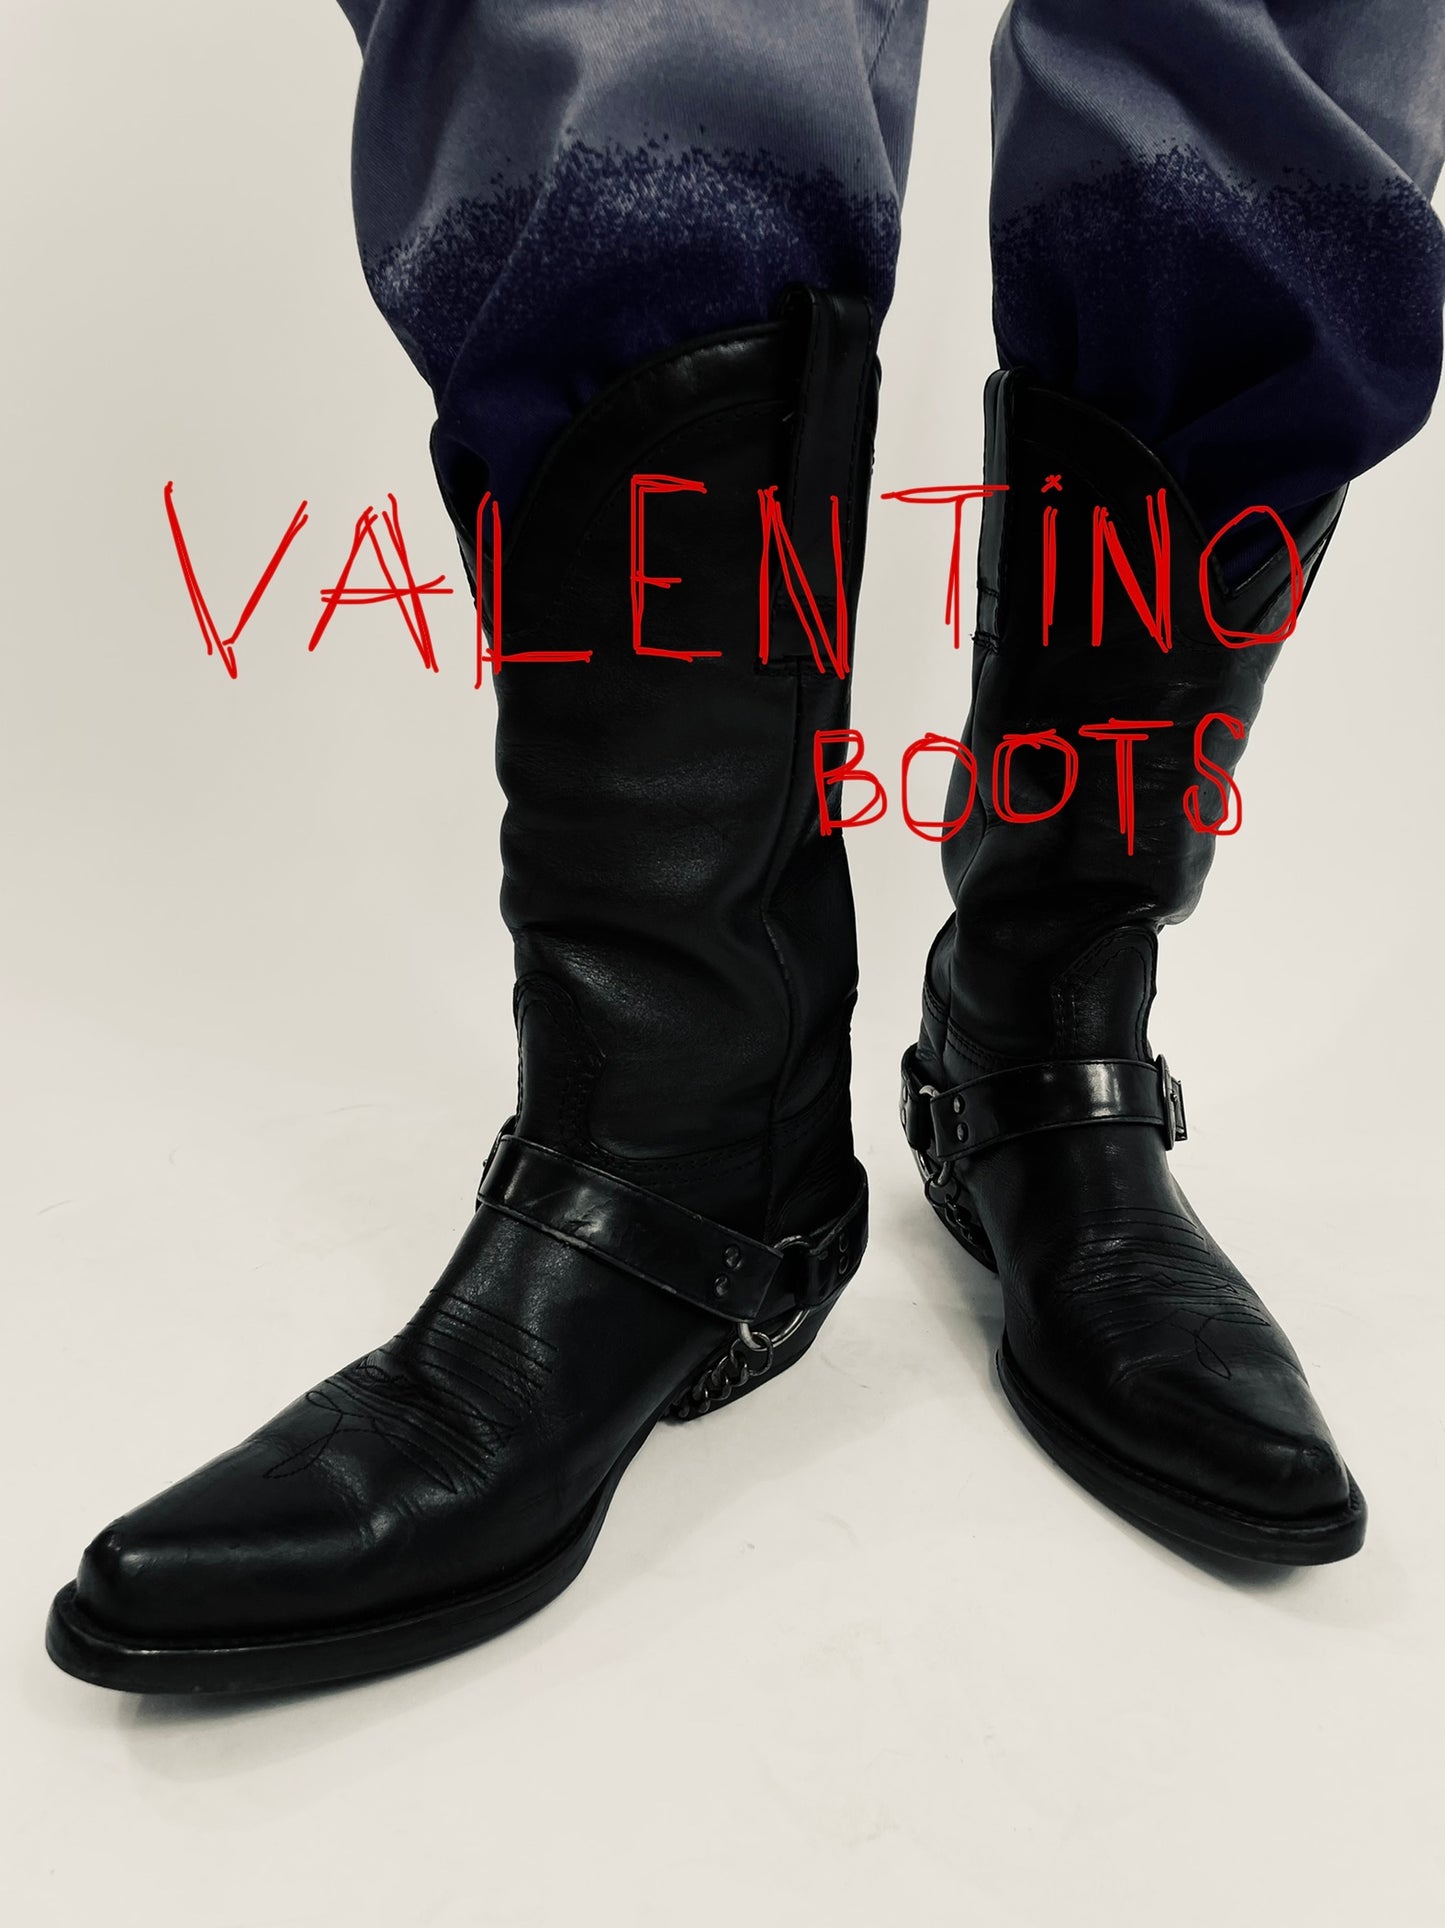 Valentino boots